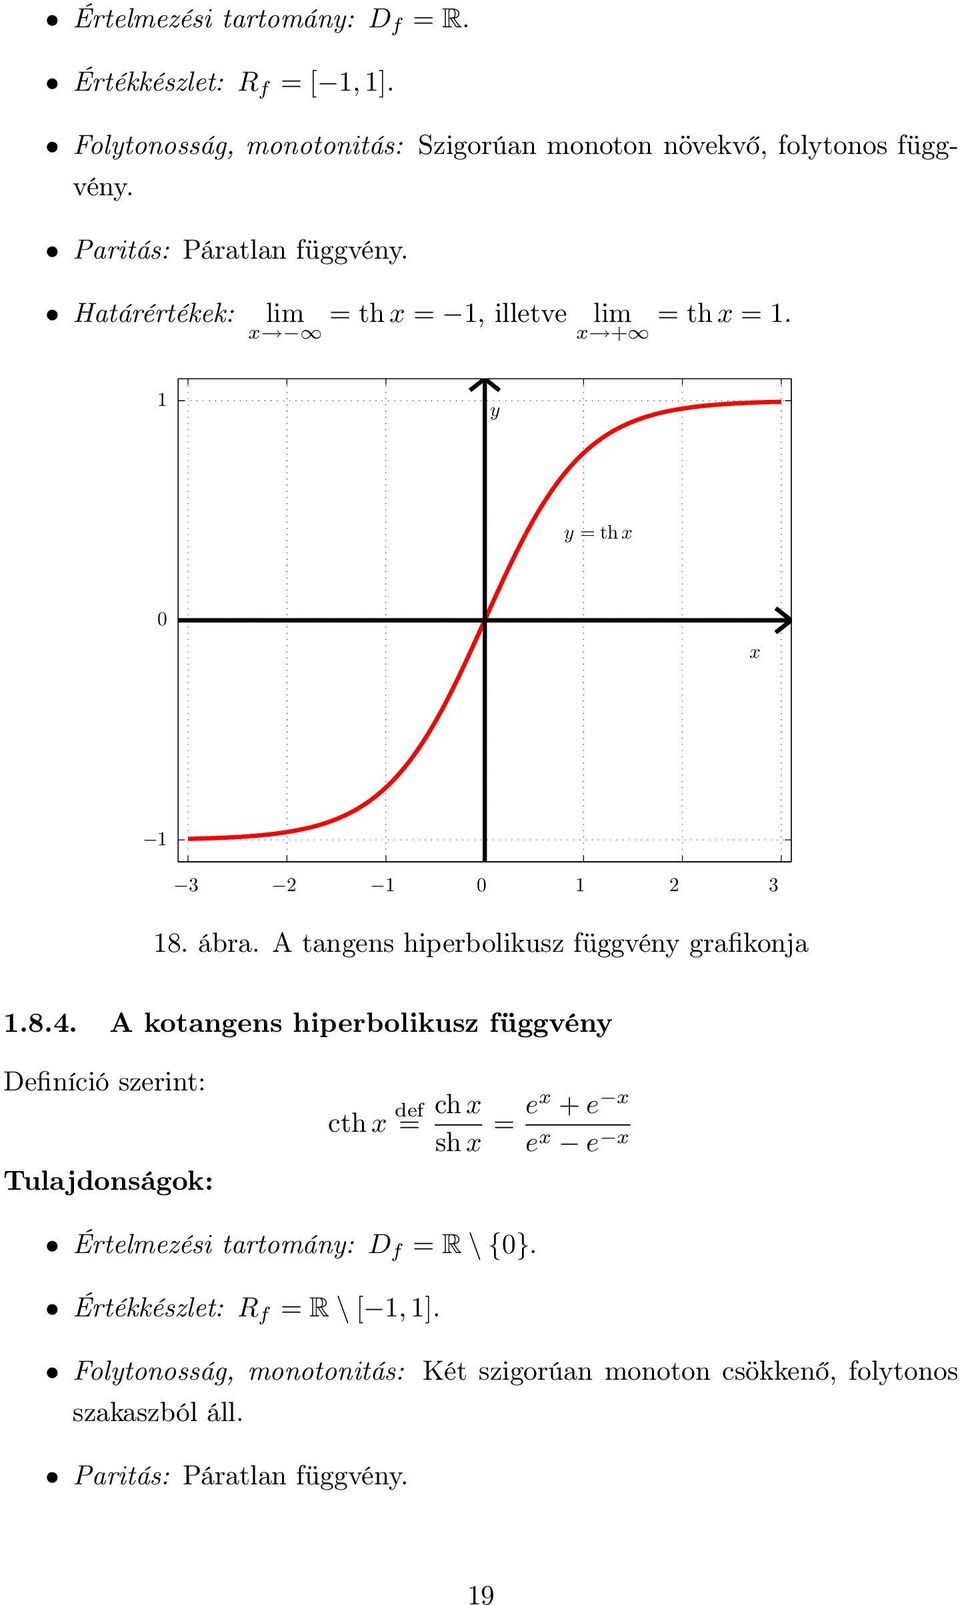 A tangens hiperbolikusz függvén grafikonja.8.4.